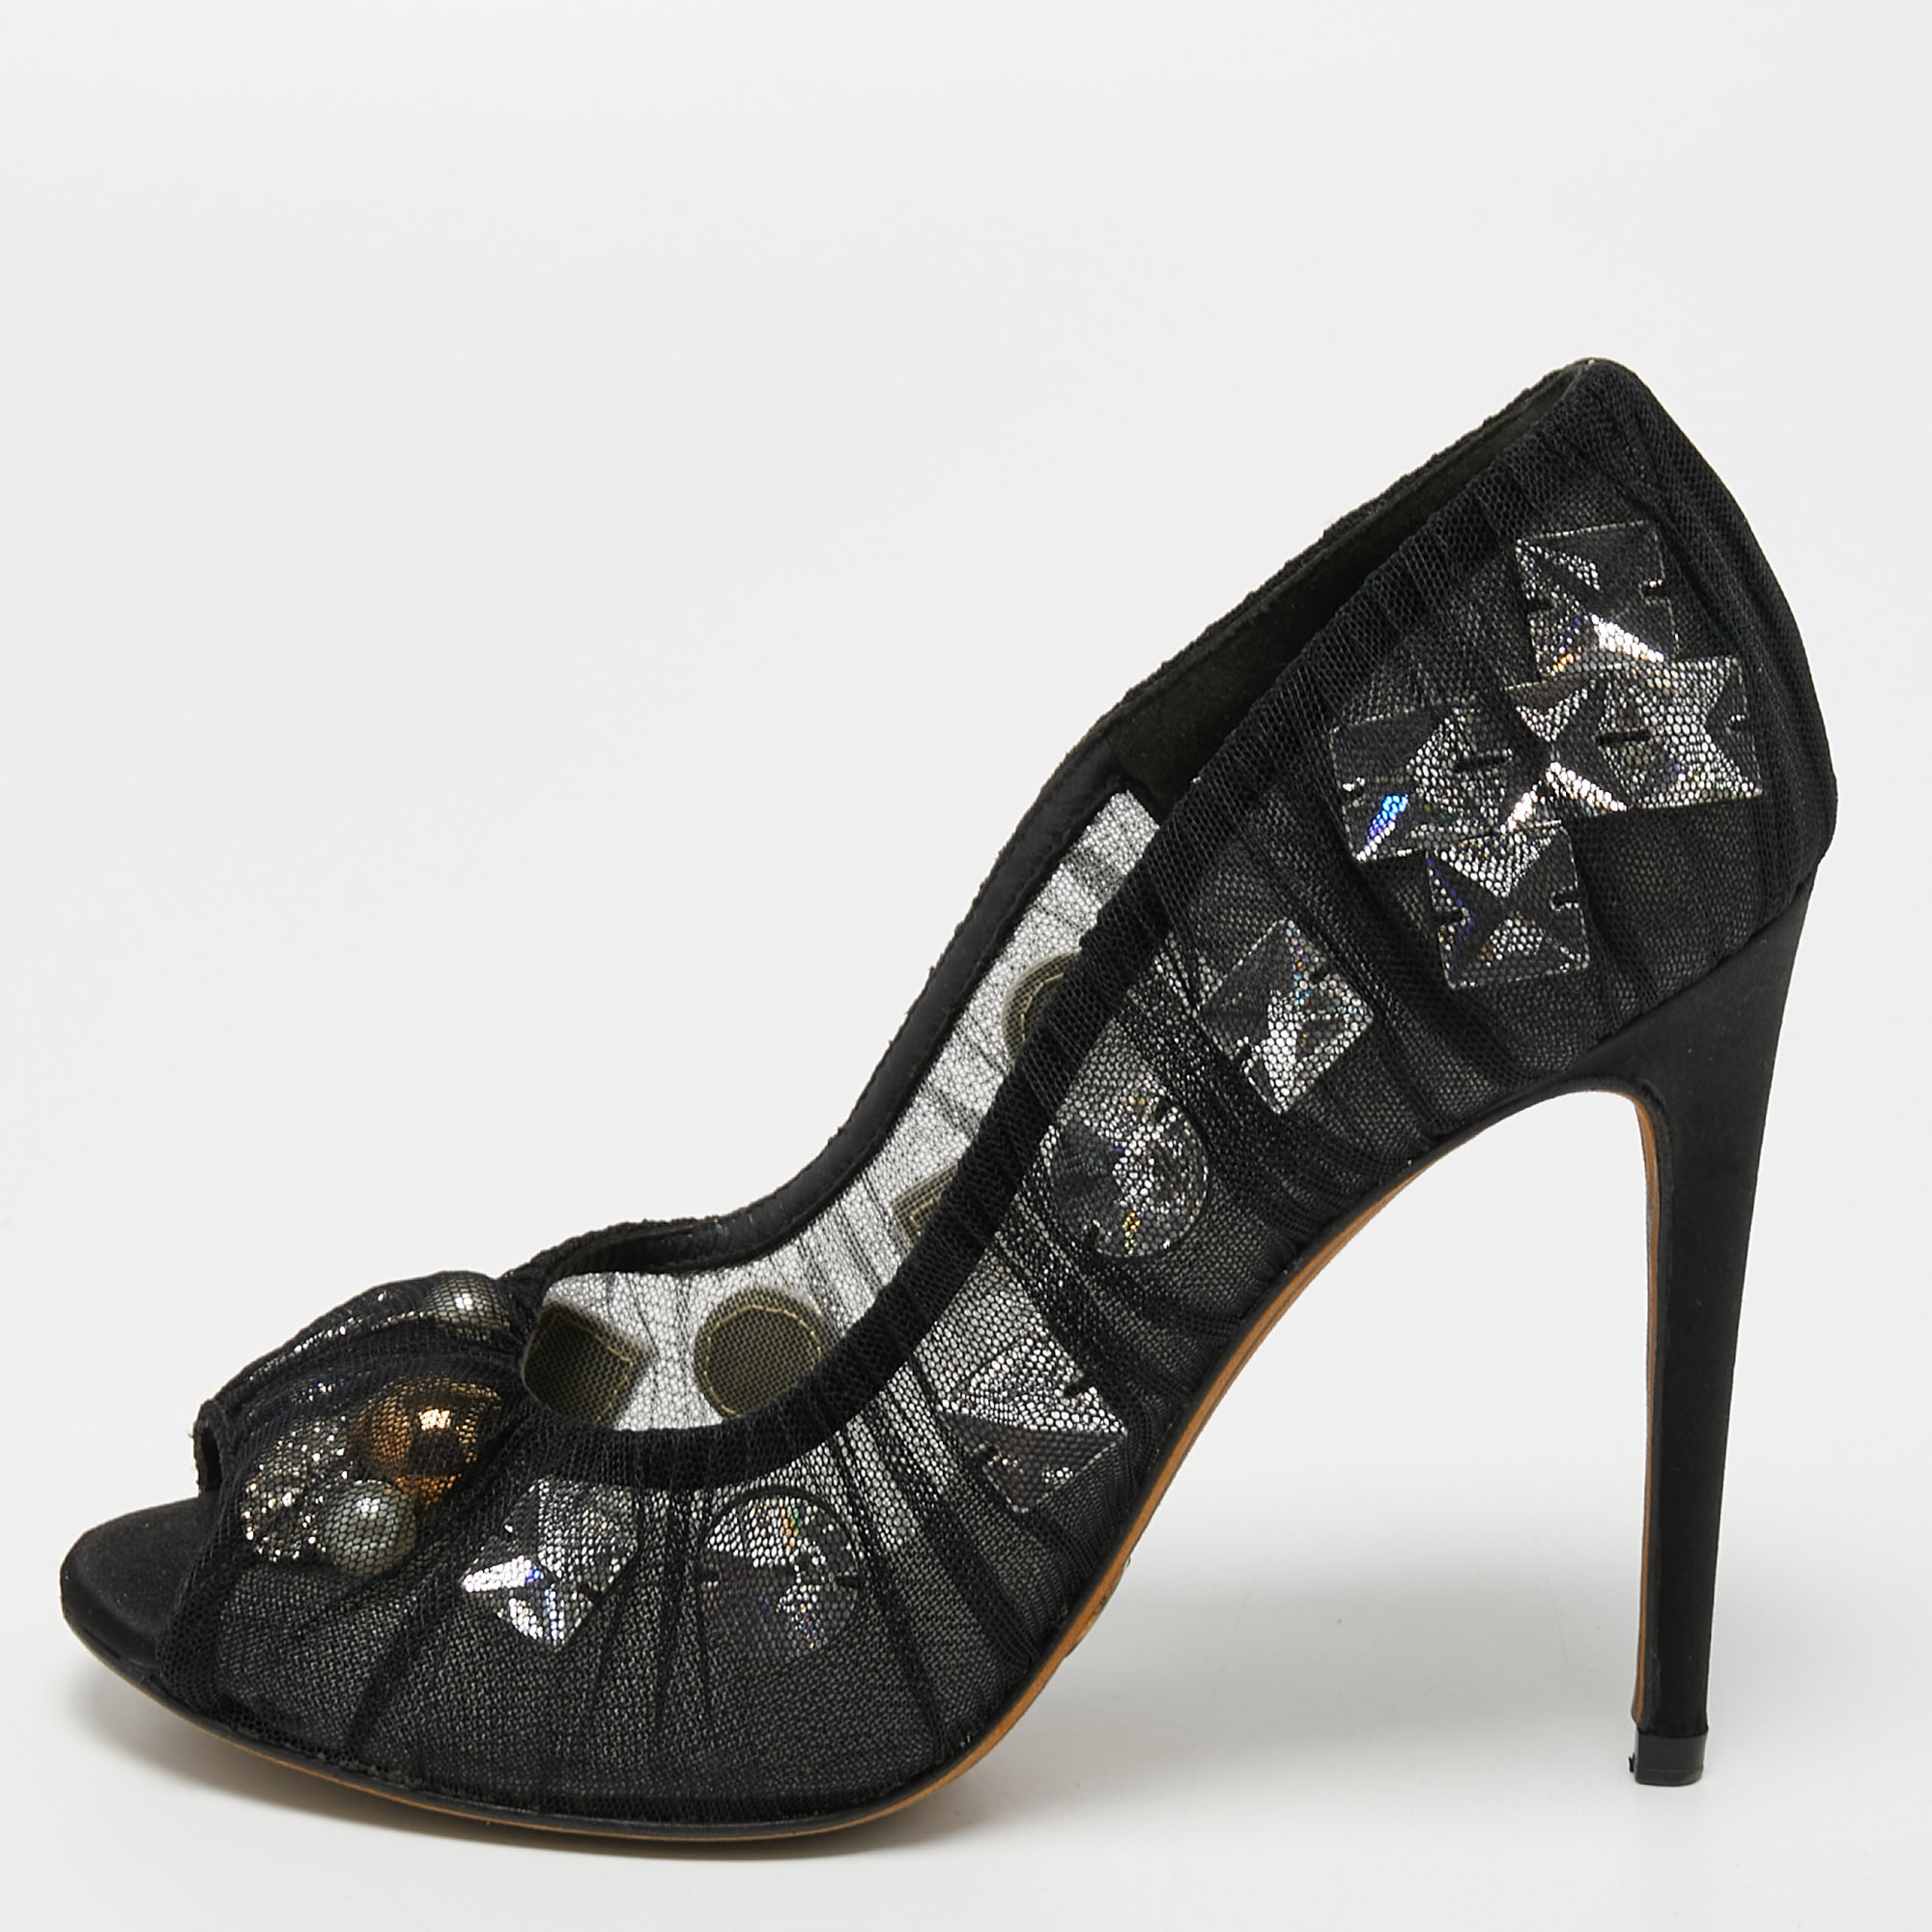 Dolce & Gabbana Black Net Crystal Embellished Peep Toe Pumps Size 37.5